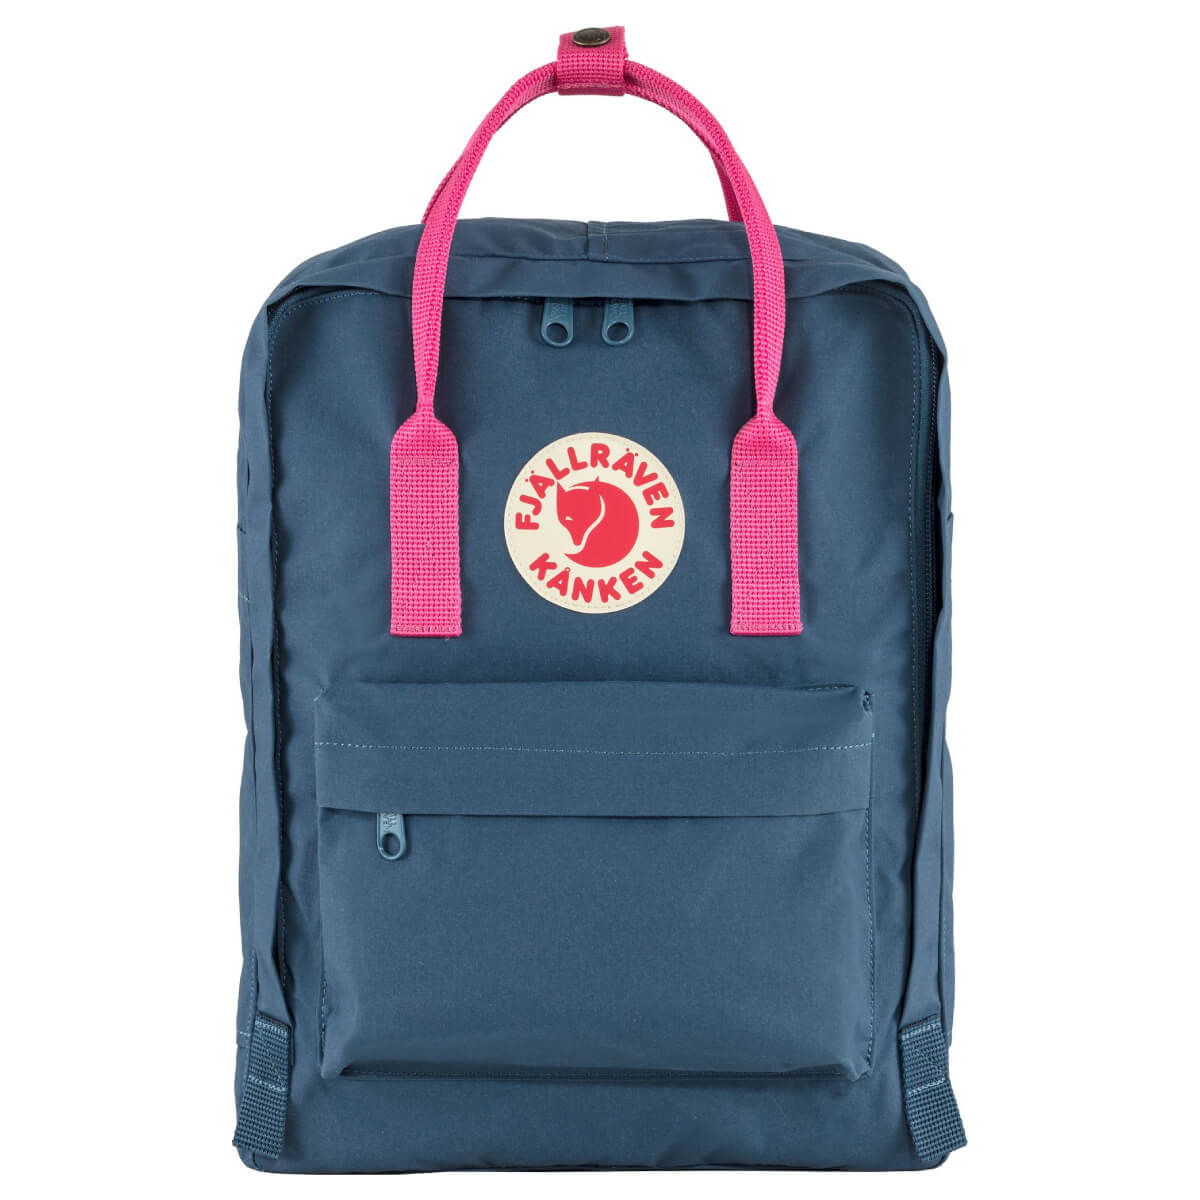 Міський рюкзак Fjallraven Kanken Royal Blue/Flamingo Pink 16 л 23510.540-450